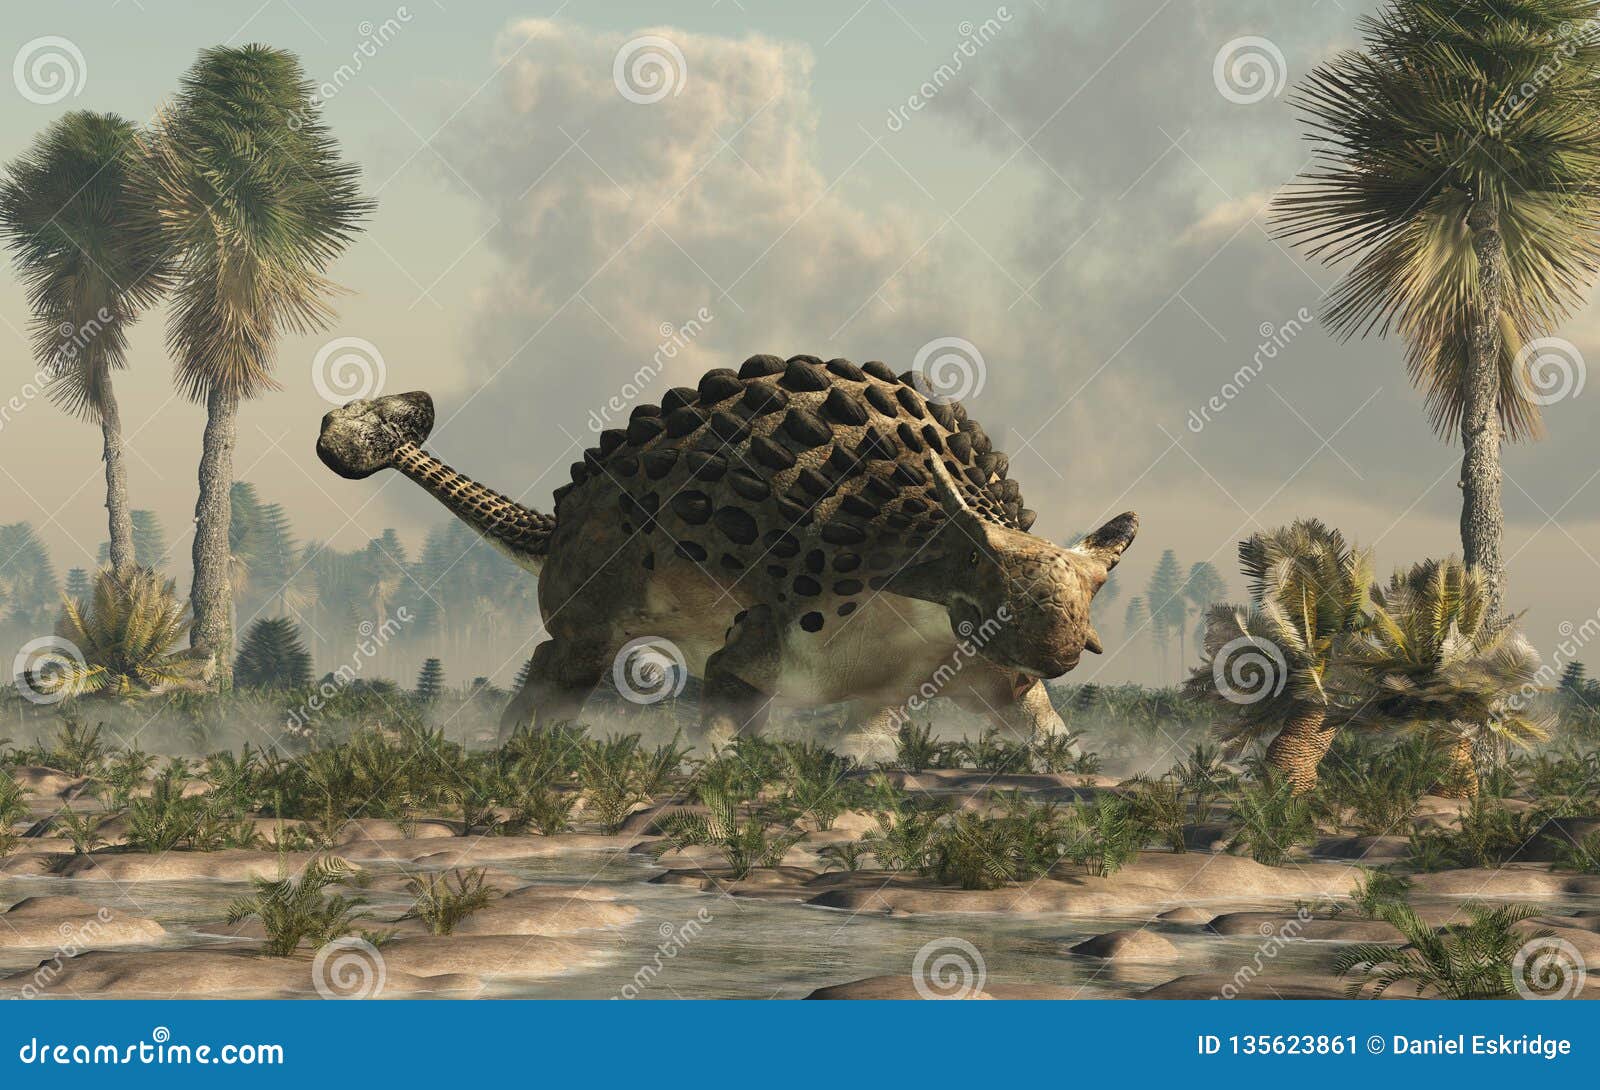 ankylosaurus in a wetland